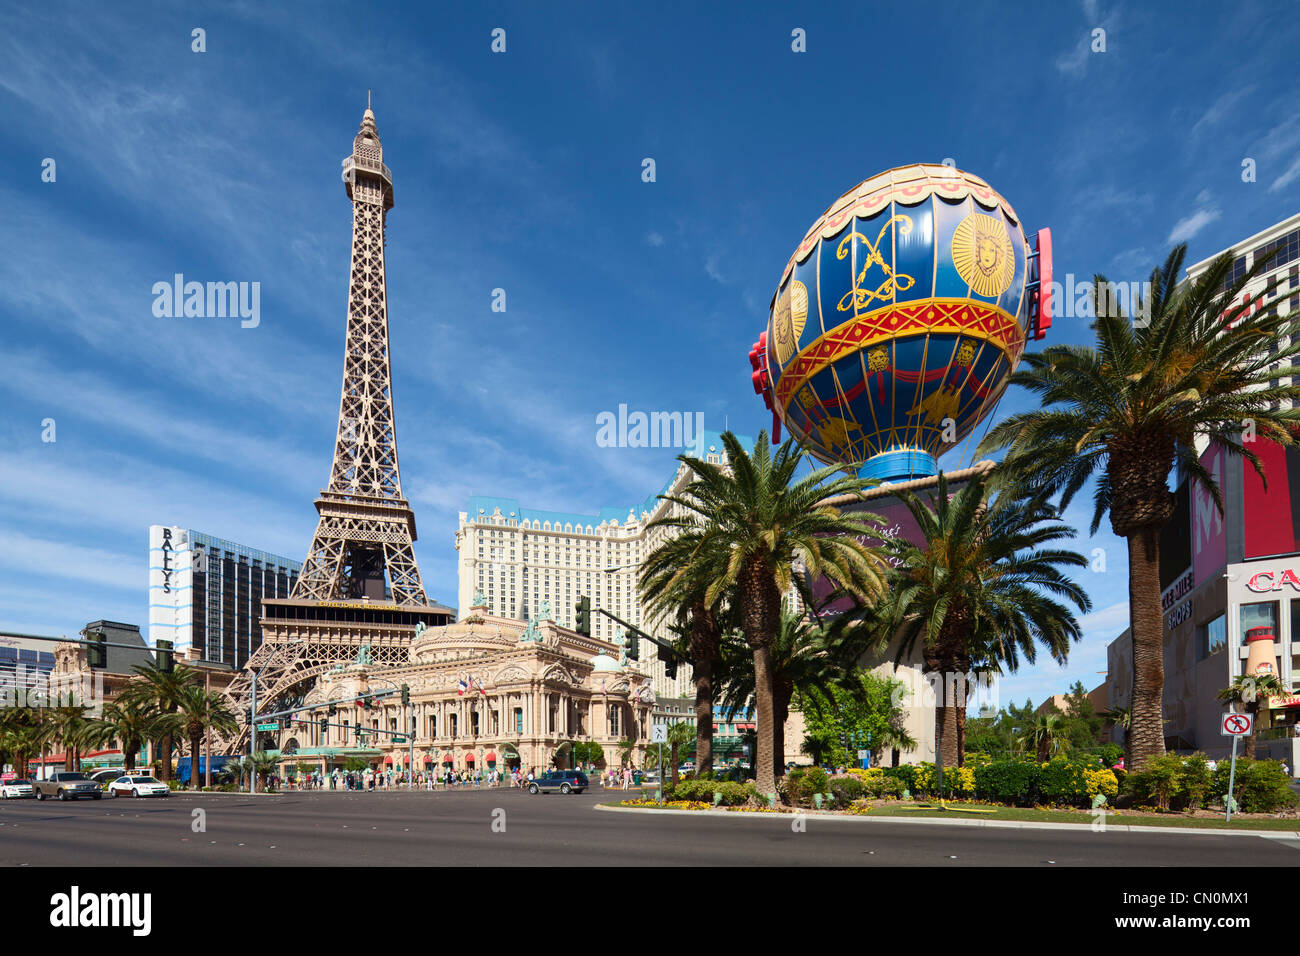 Paris Las Vegas w mieście Las Vegas (Nevada) oferuje bezpłatne